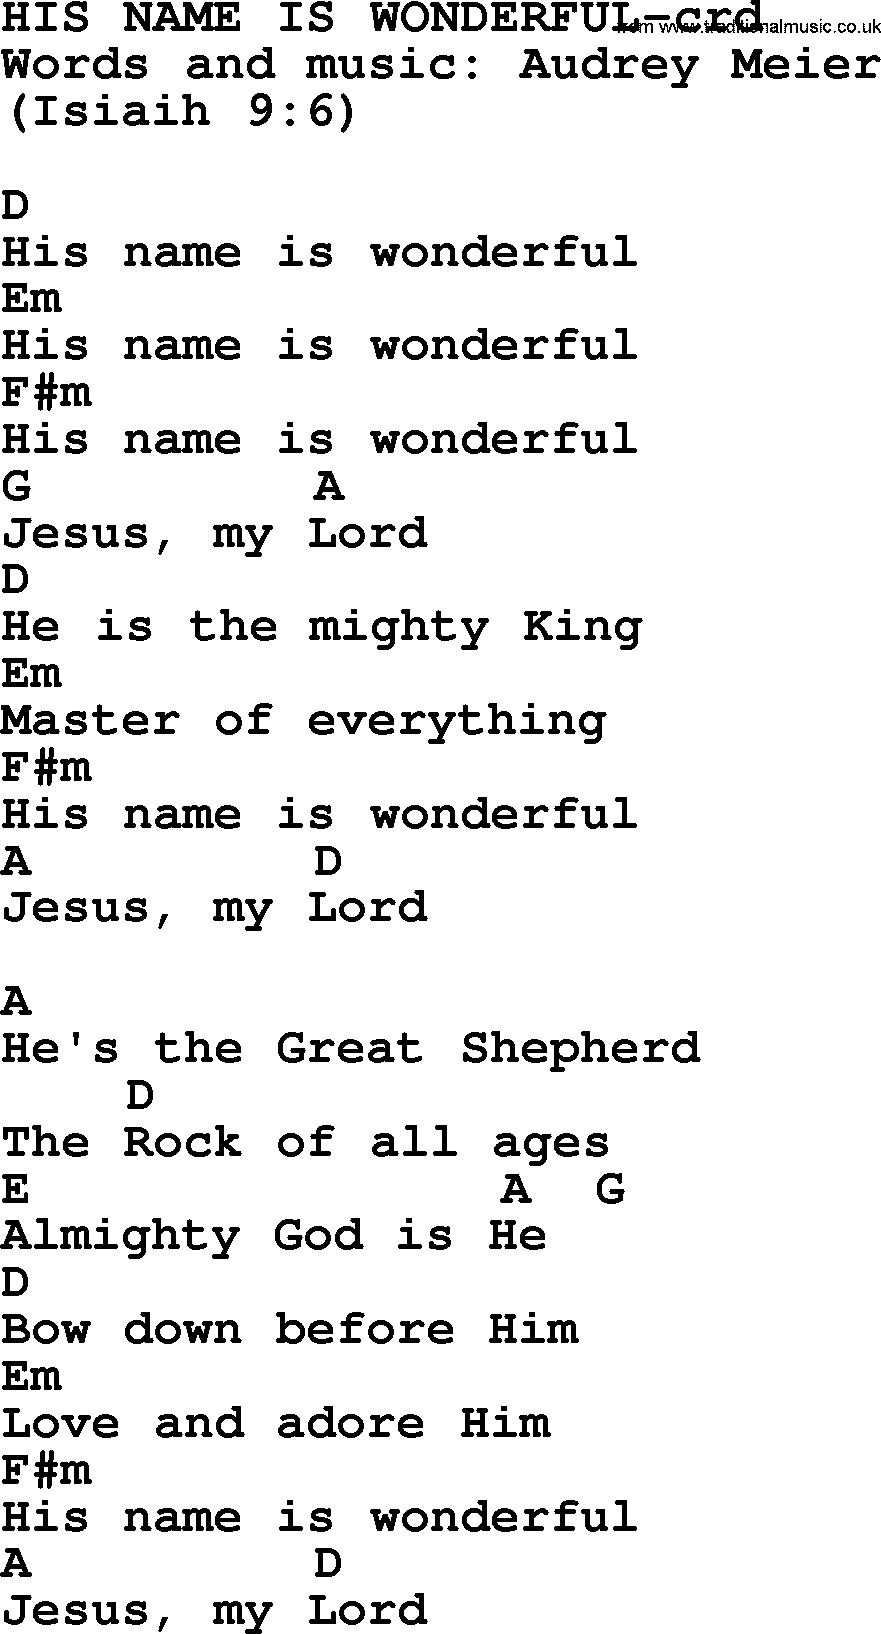 Top 500 Hymn: His Name Is Wonderful, lyrics and chords